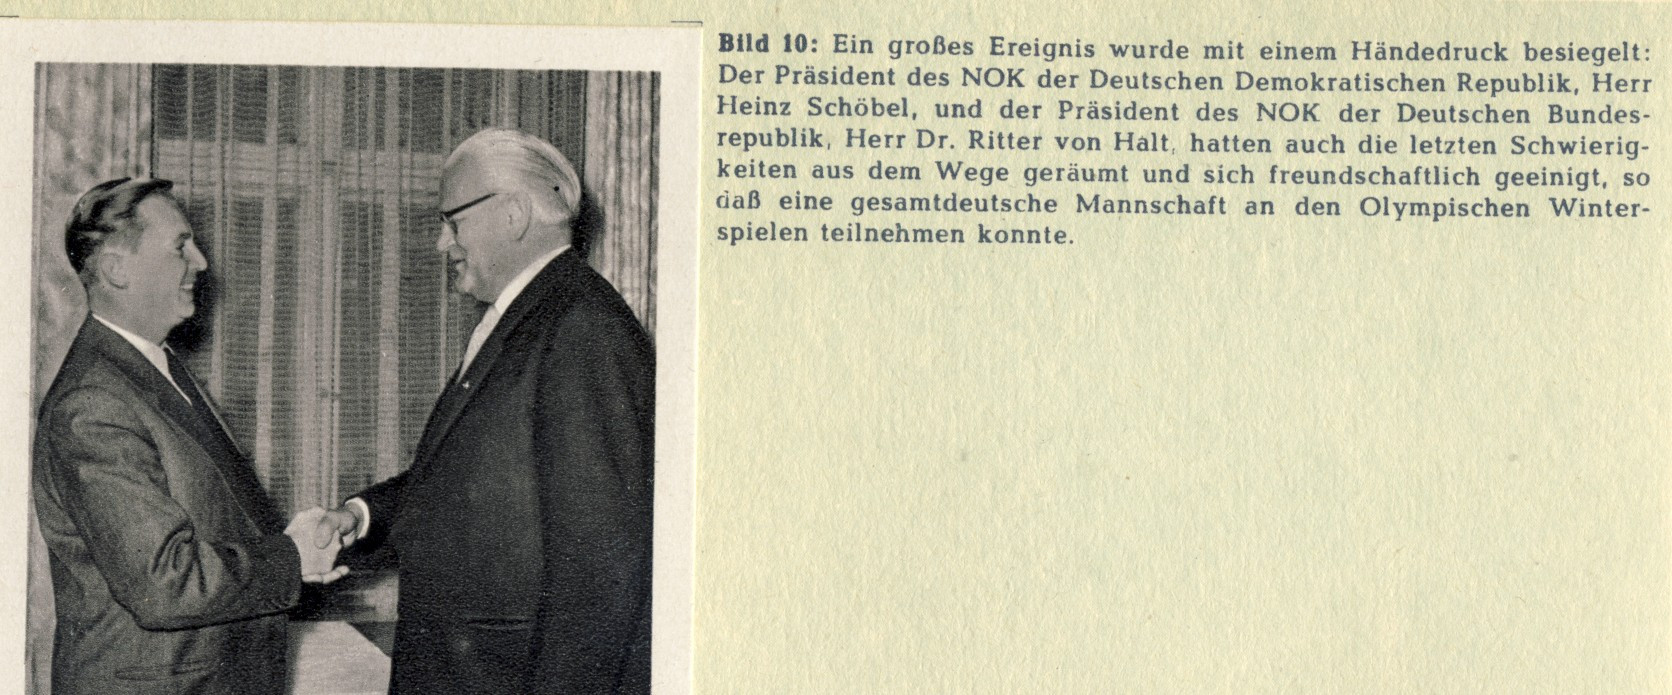 Heinz Schobel, right, was an IOC member